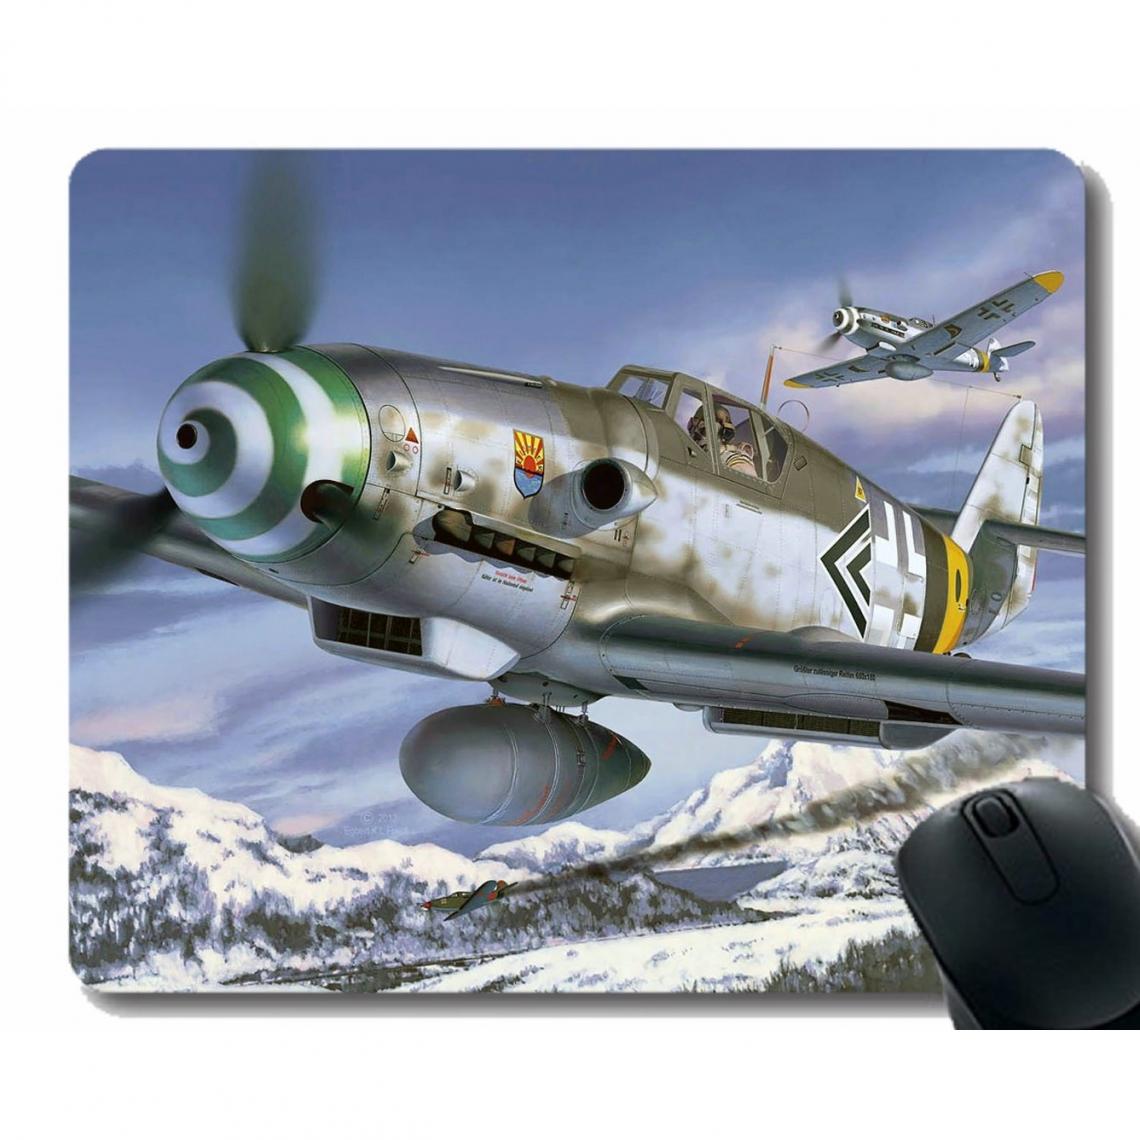 Universal - (300X250X3) Mousepad Anti-Slip Mouse Pad,Messerschmidt Bf 109 fighter art aircraft Mouse Mat,Non-Slip Rubber Base Mousepad - Tapis de souris